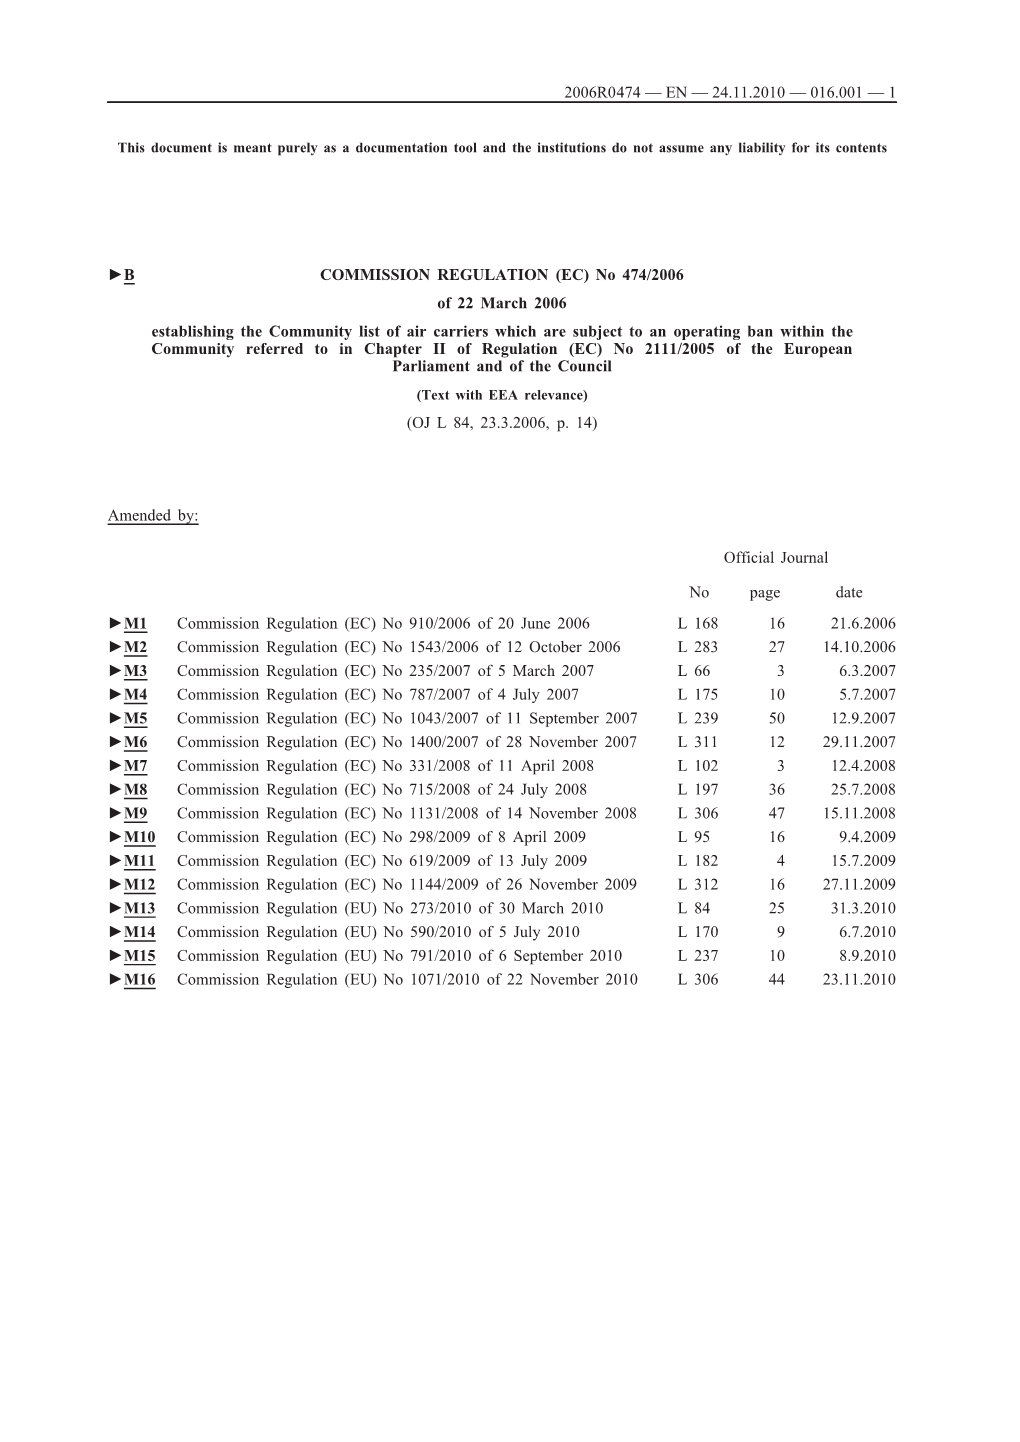 B COMMISSION REGULATION (EC) No 474/2006 of 22